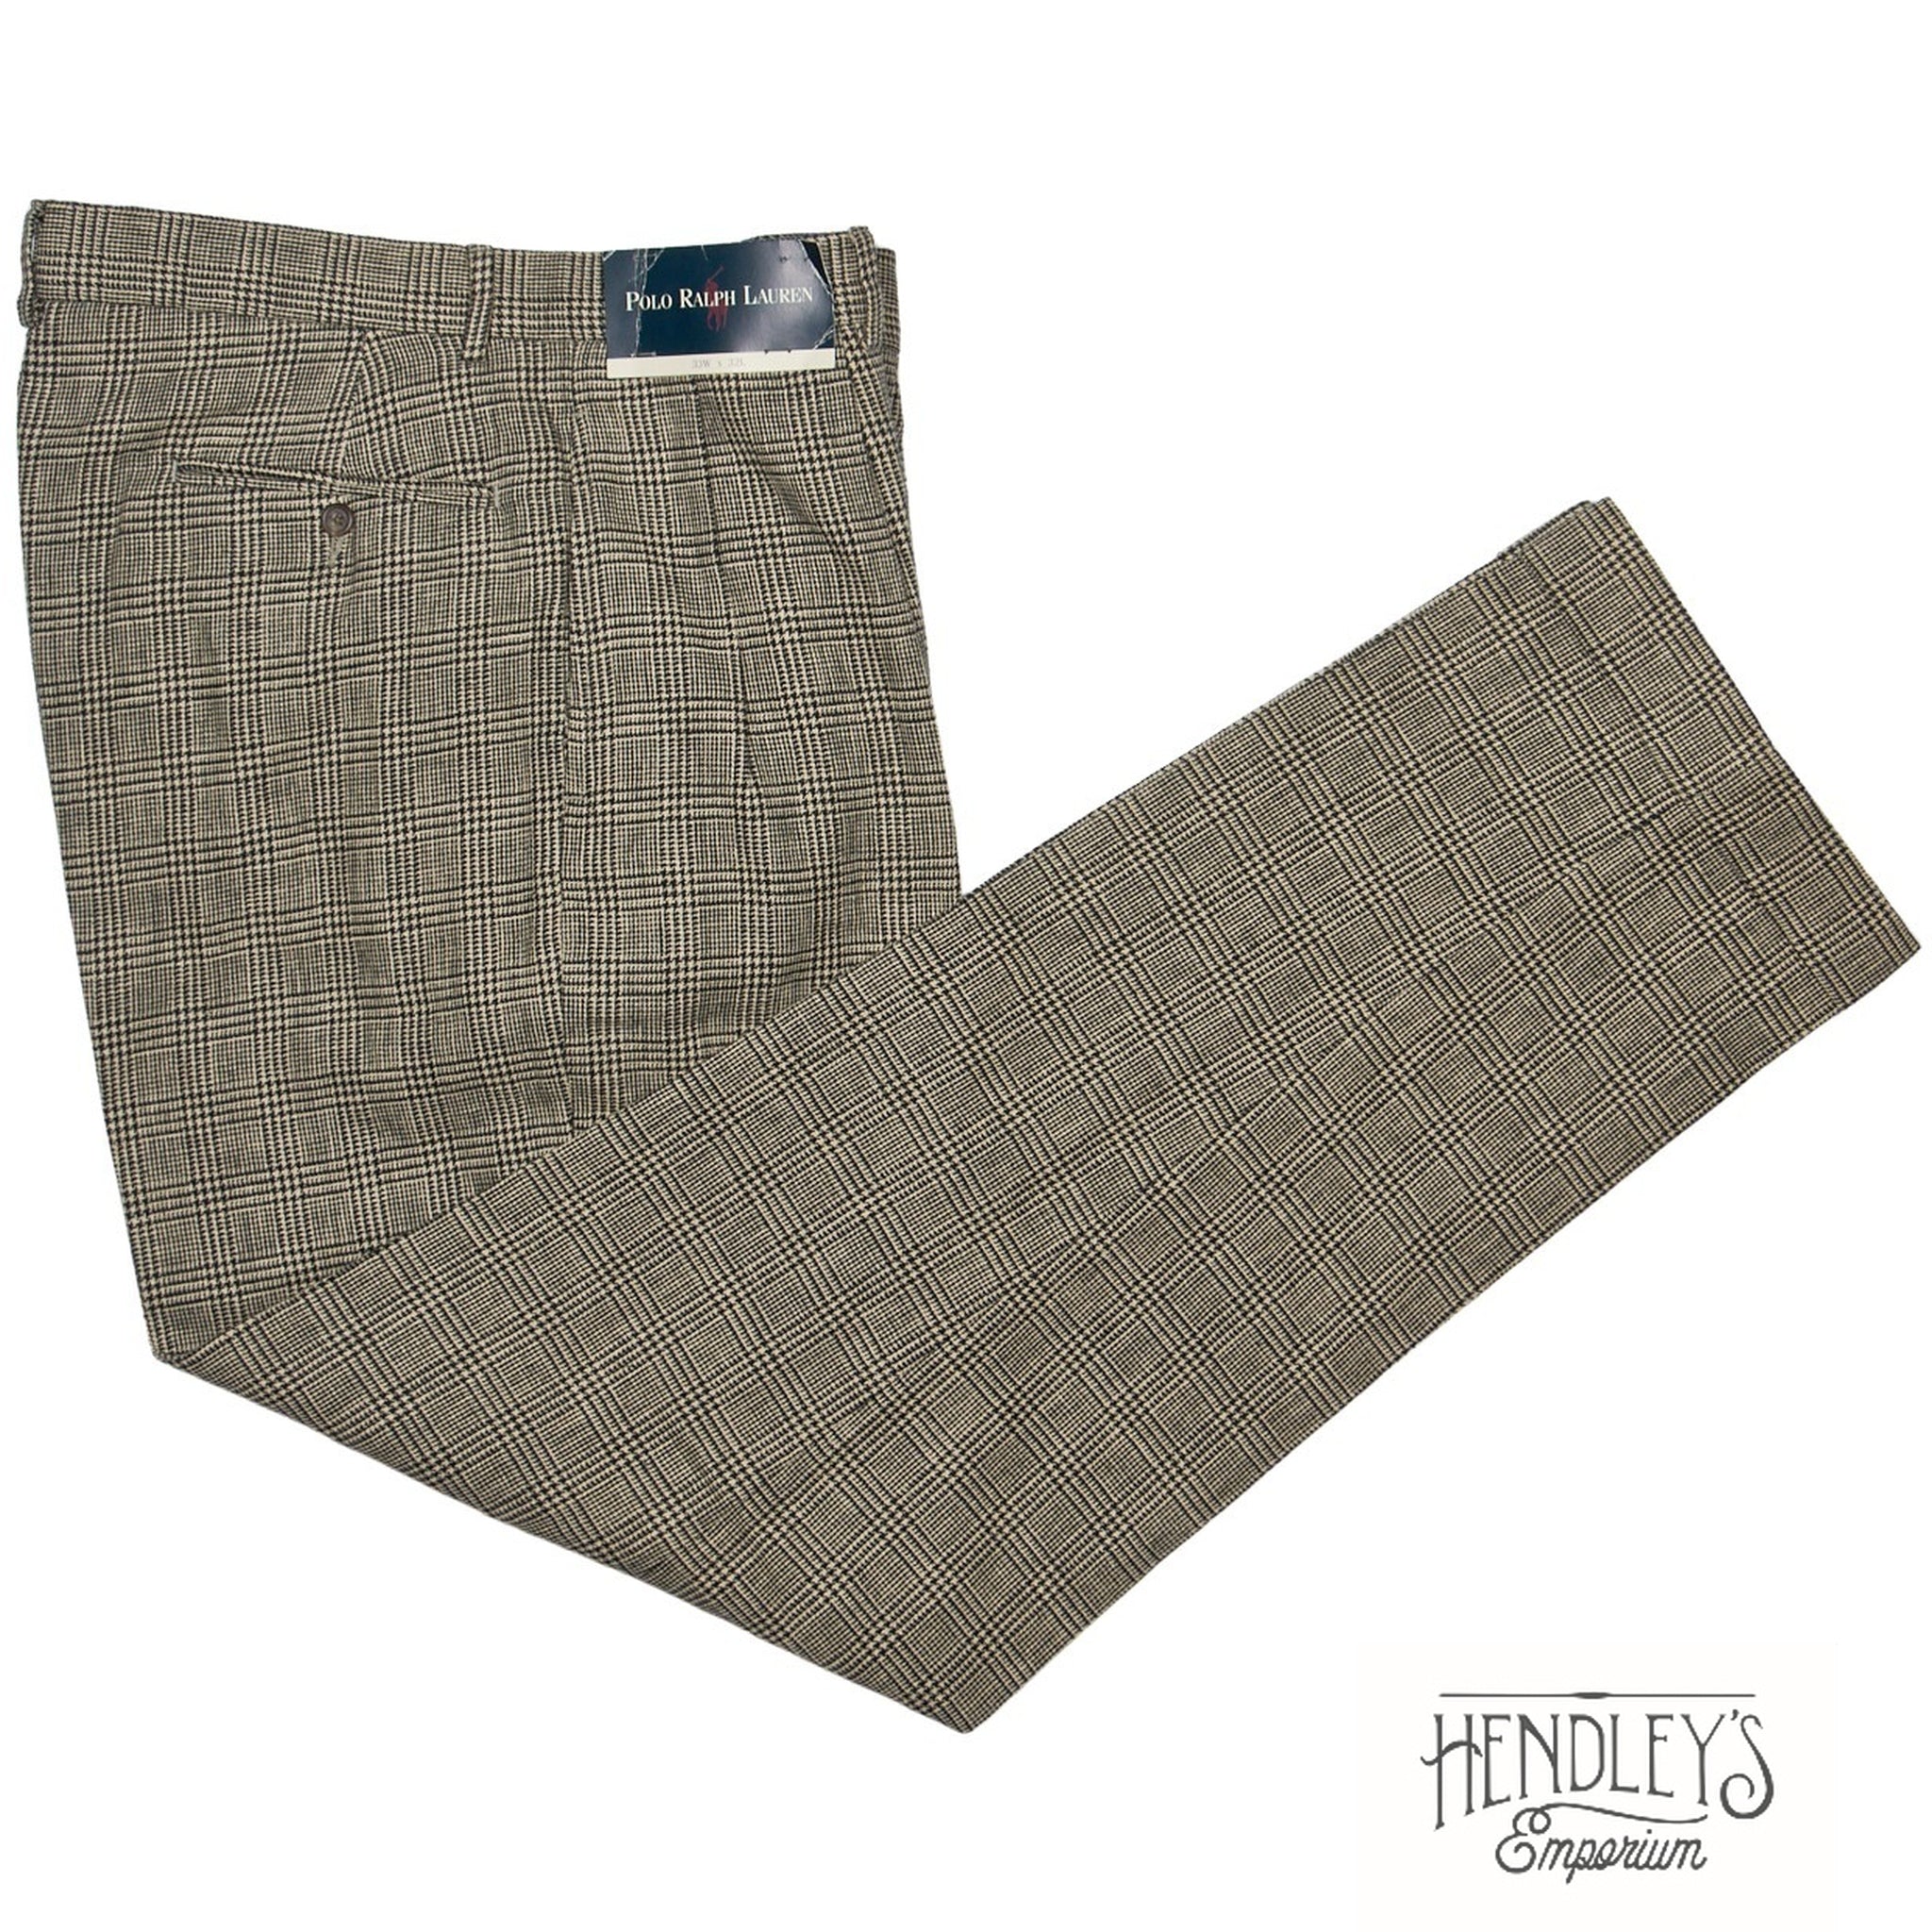 Polo by Ralph Lauren, Pants